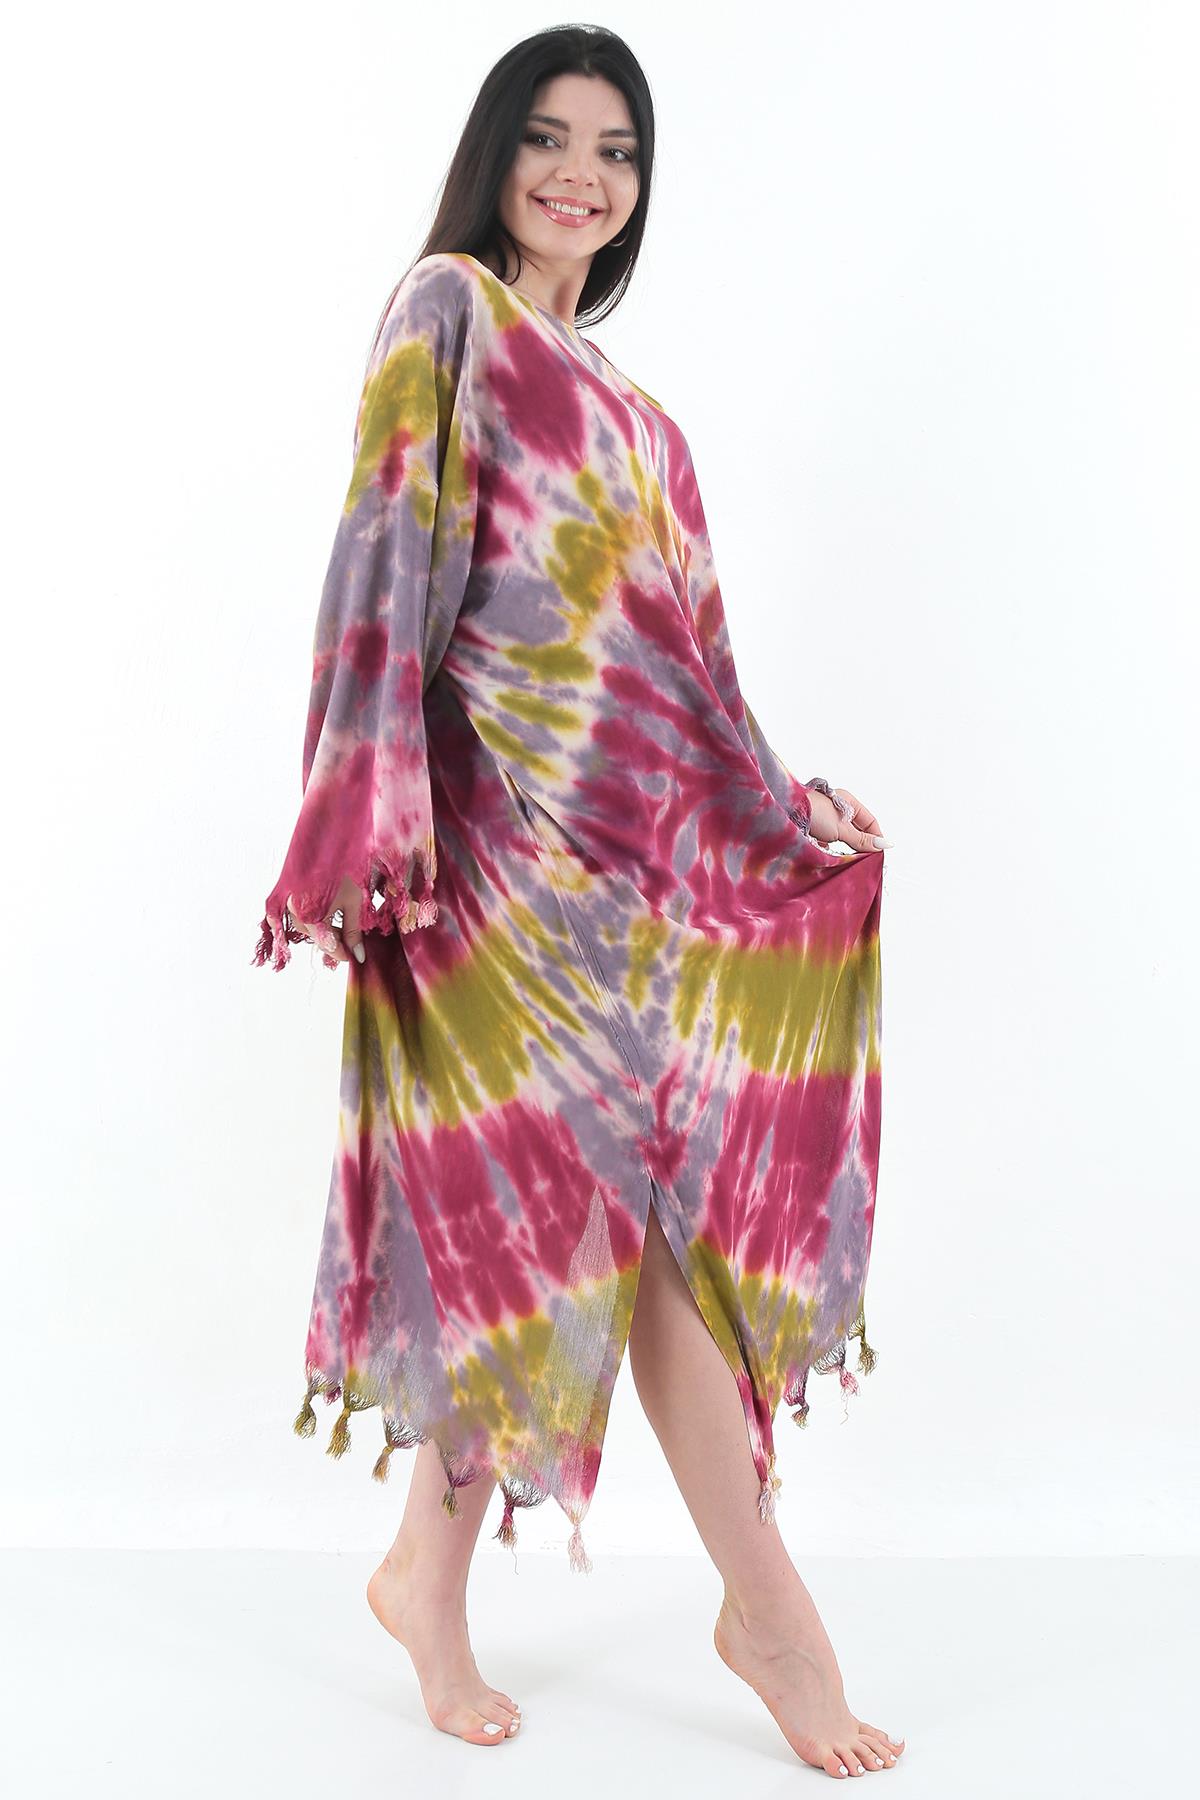 Otantik Batik Elbise Modelleri - Viemor.com